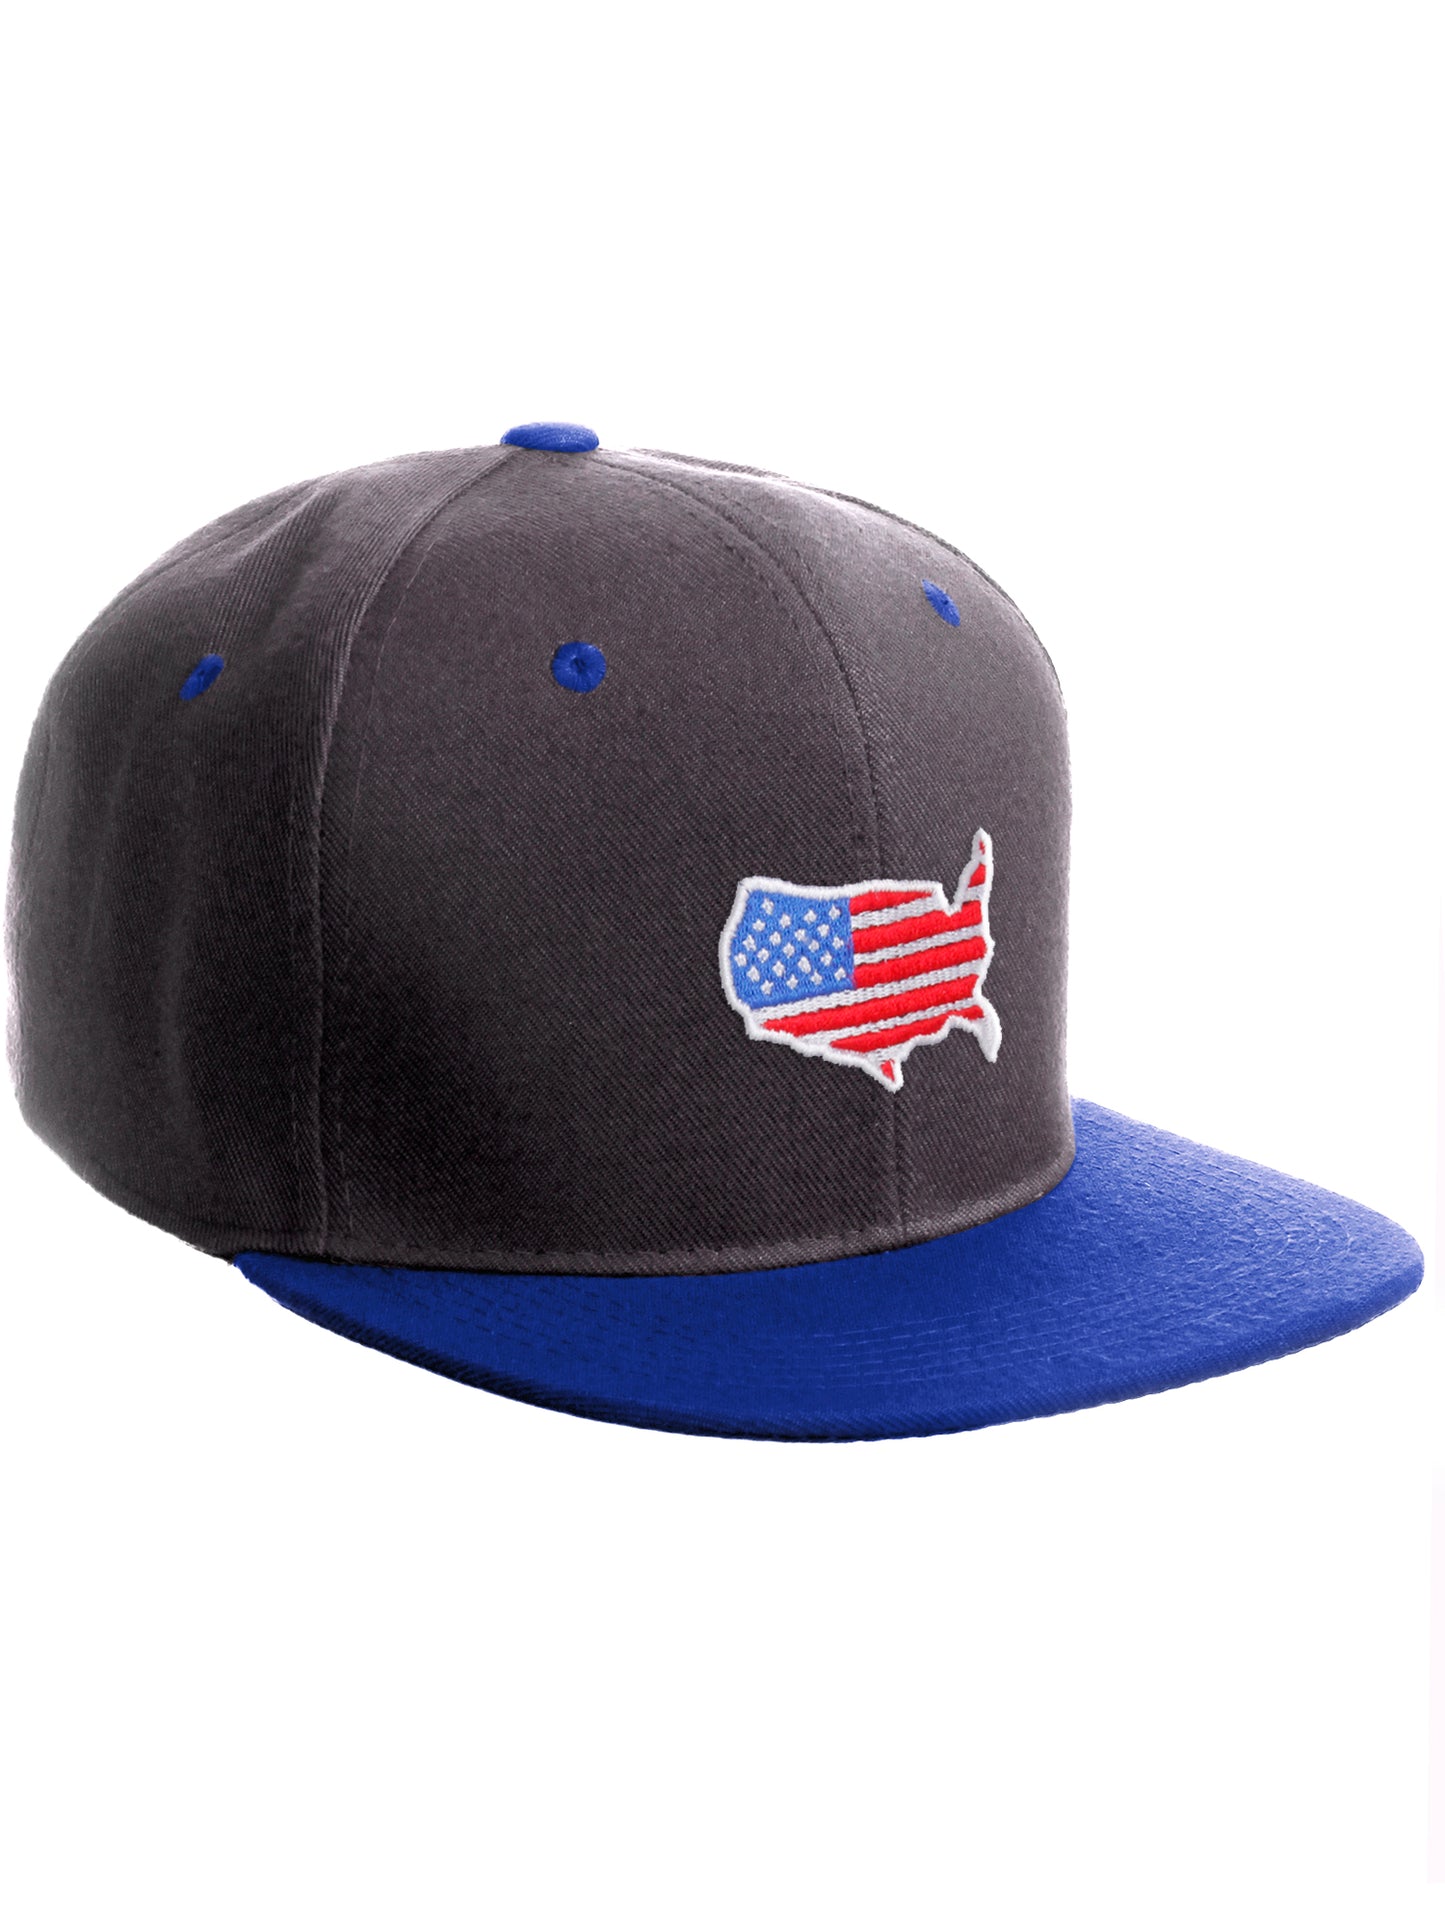 Daxton Embroidered USA Flag Snapback Flat Bill Hat Cap Adjustable Back